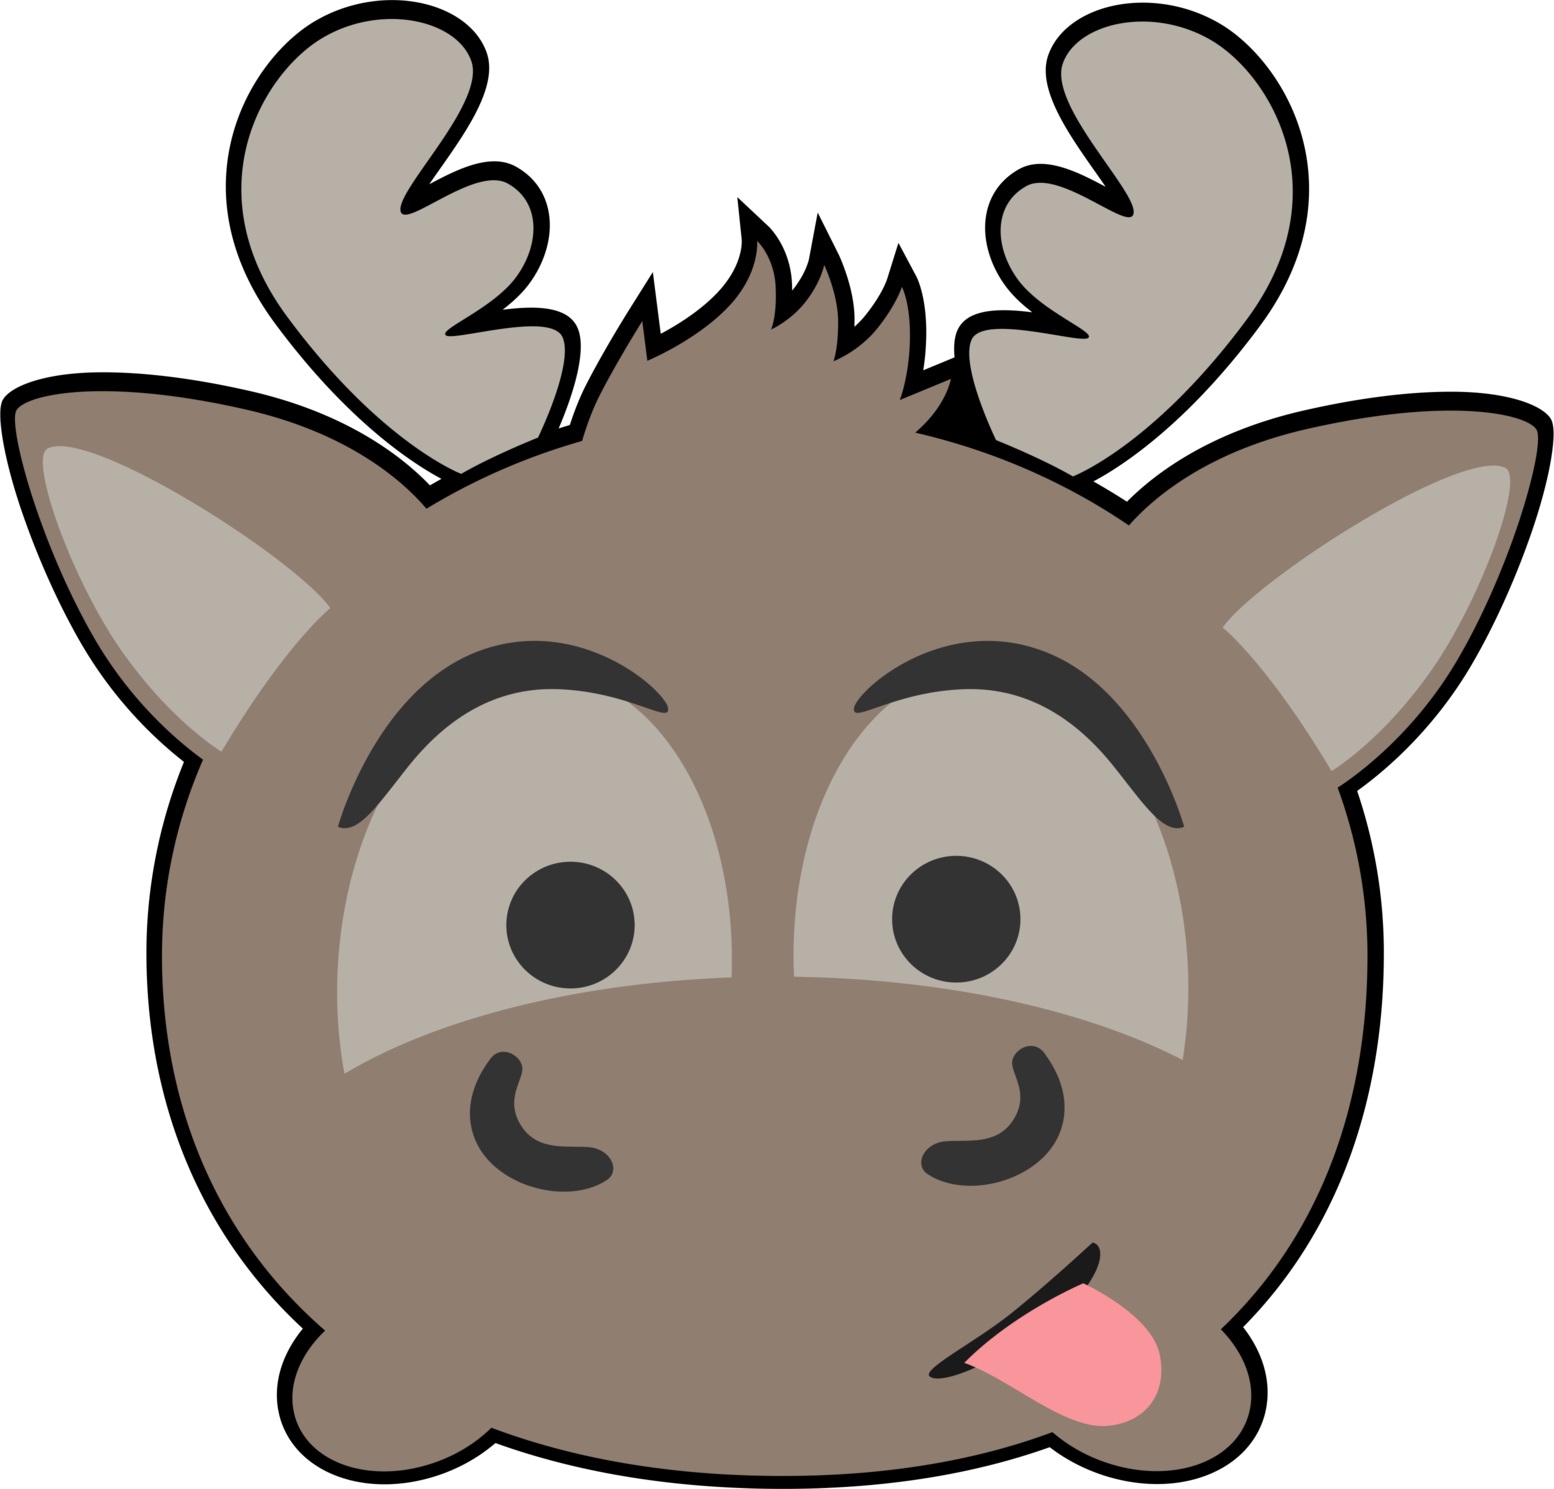 A Cartoon Of A Moose